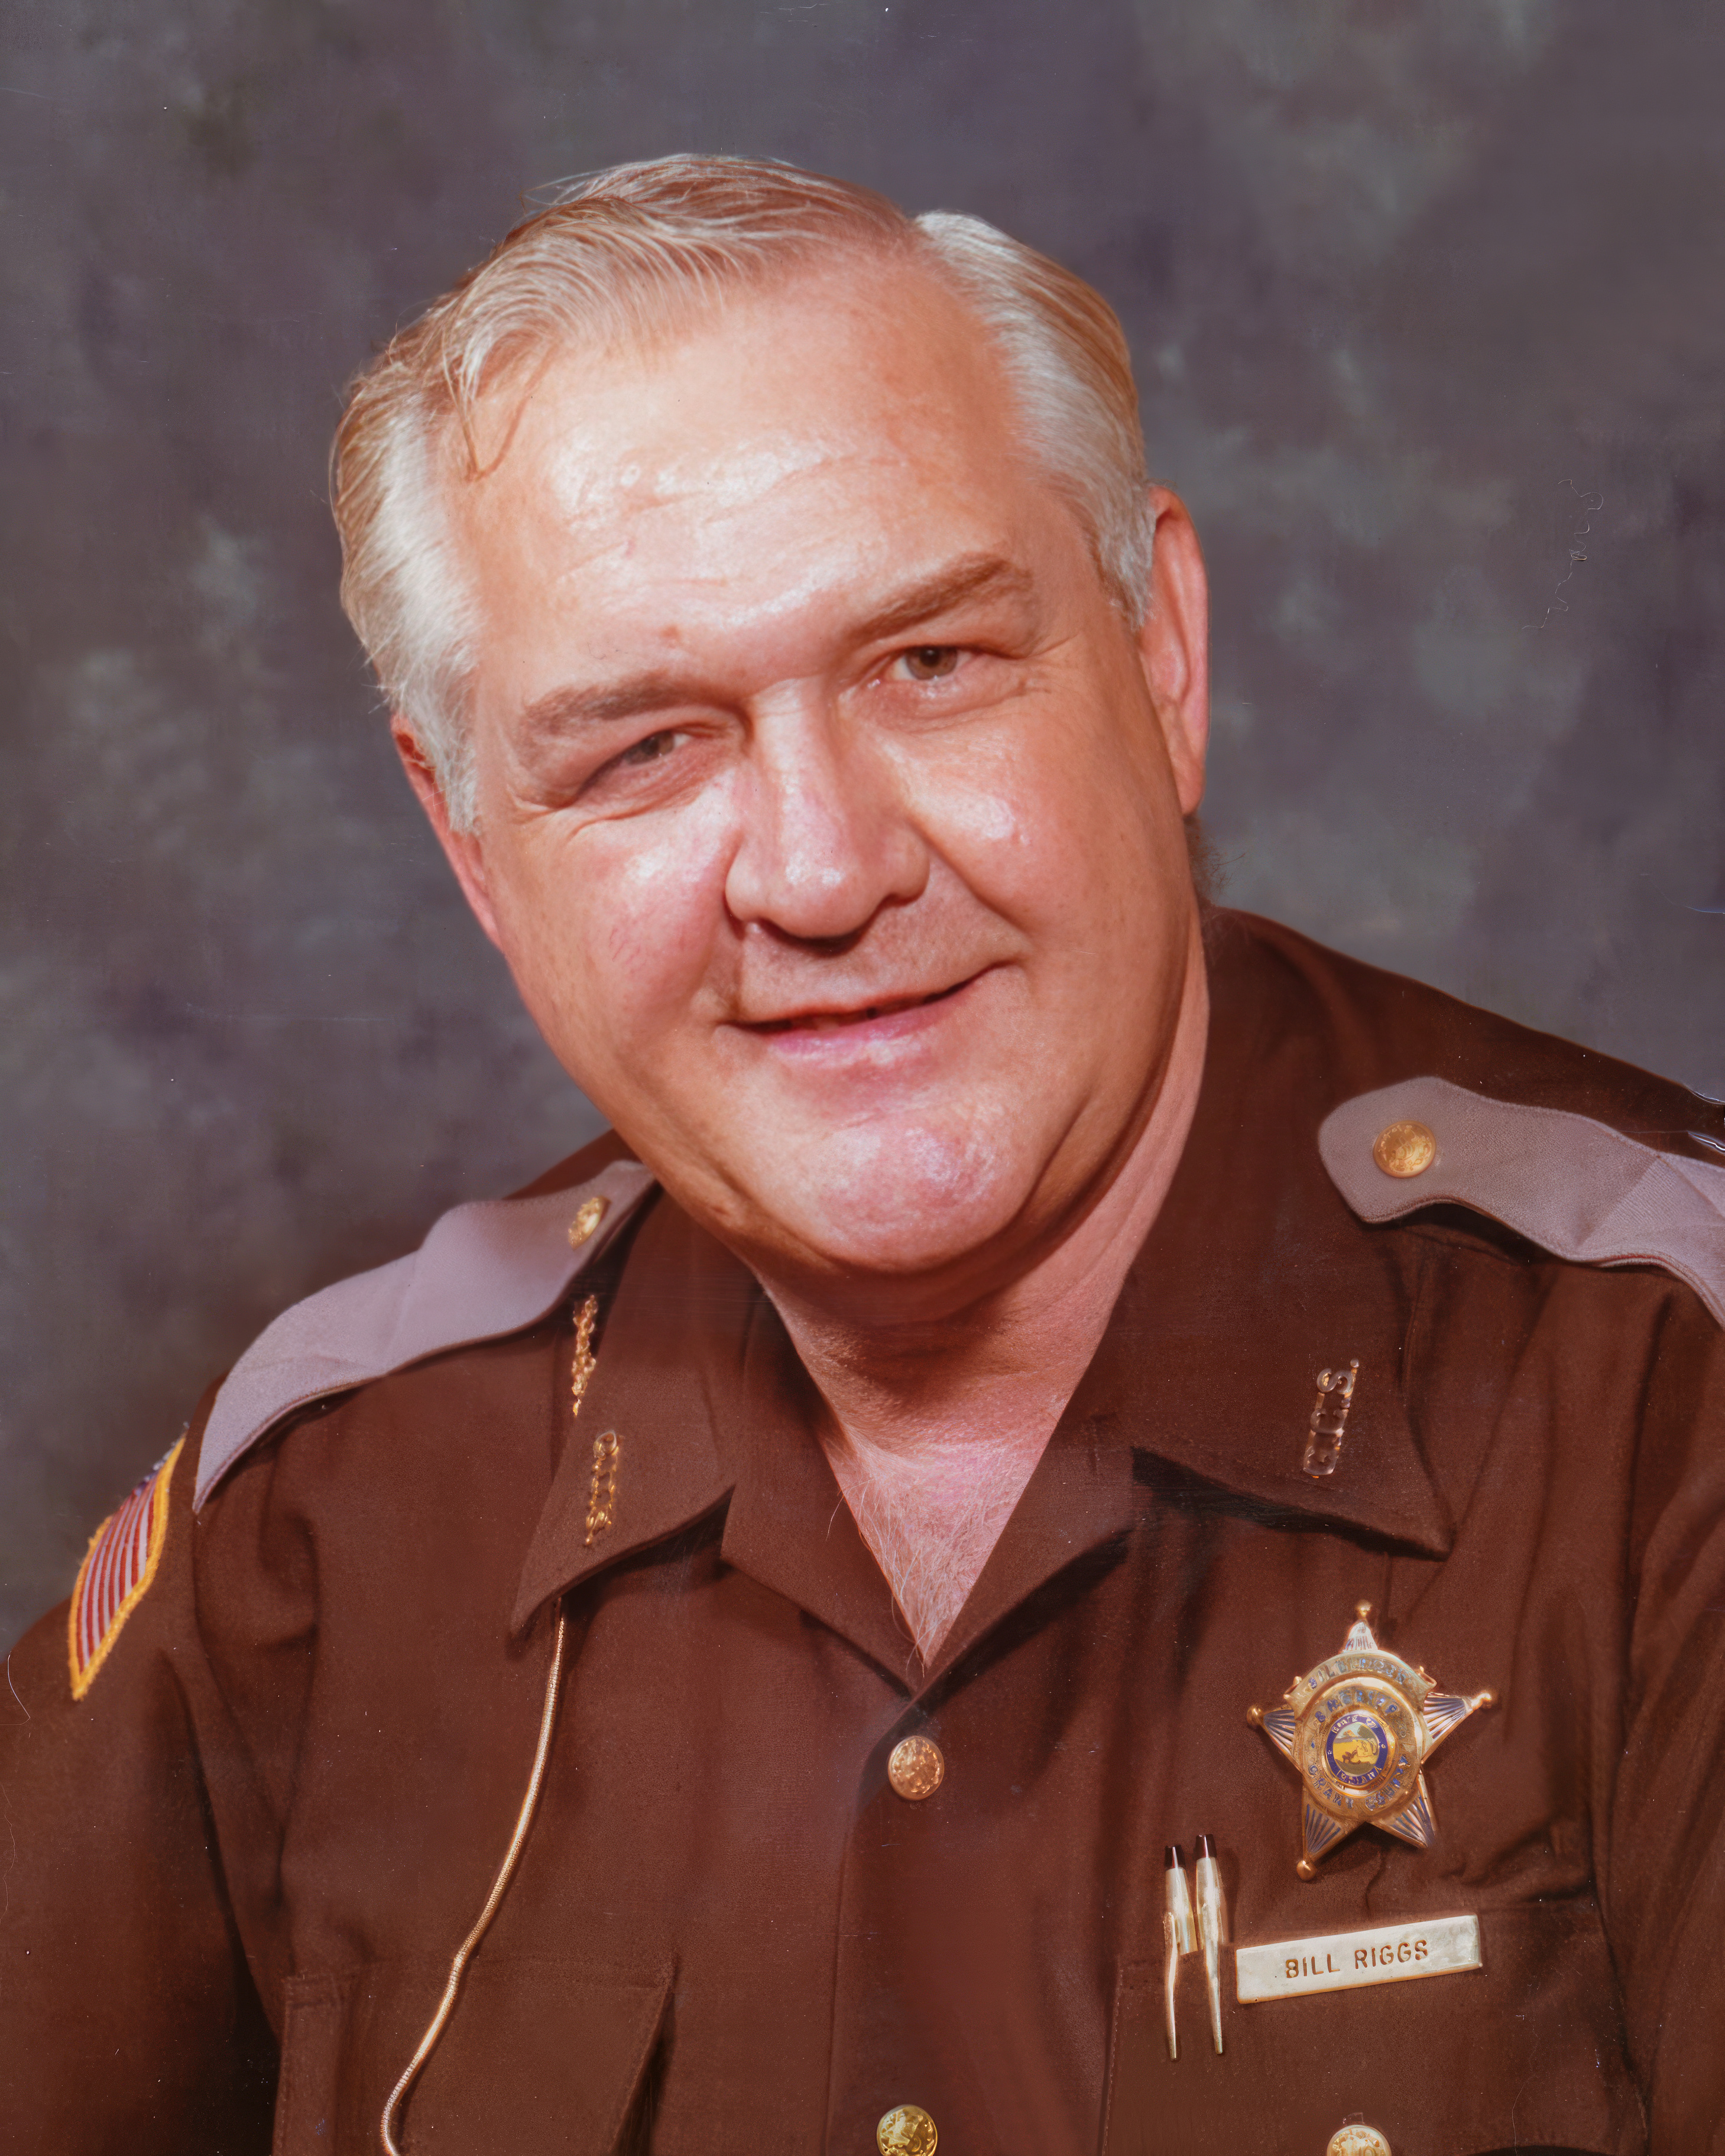 Sheriff Rigs